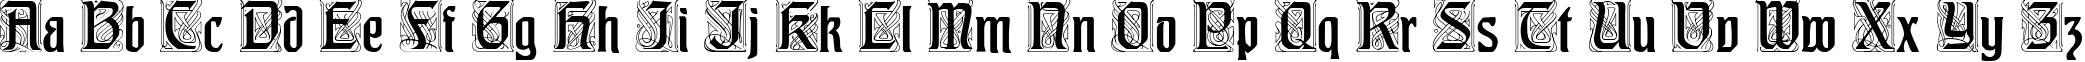 Пример написания английского алфавита шрифтом Augusta One